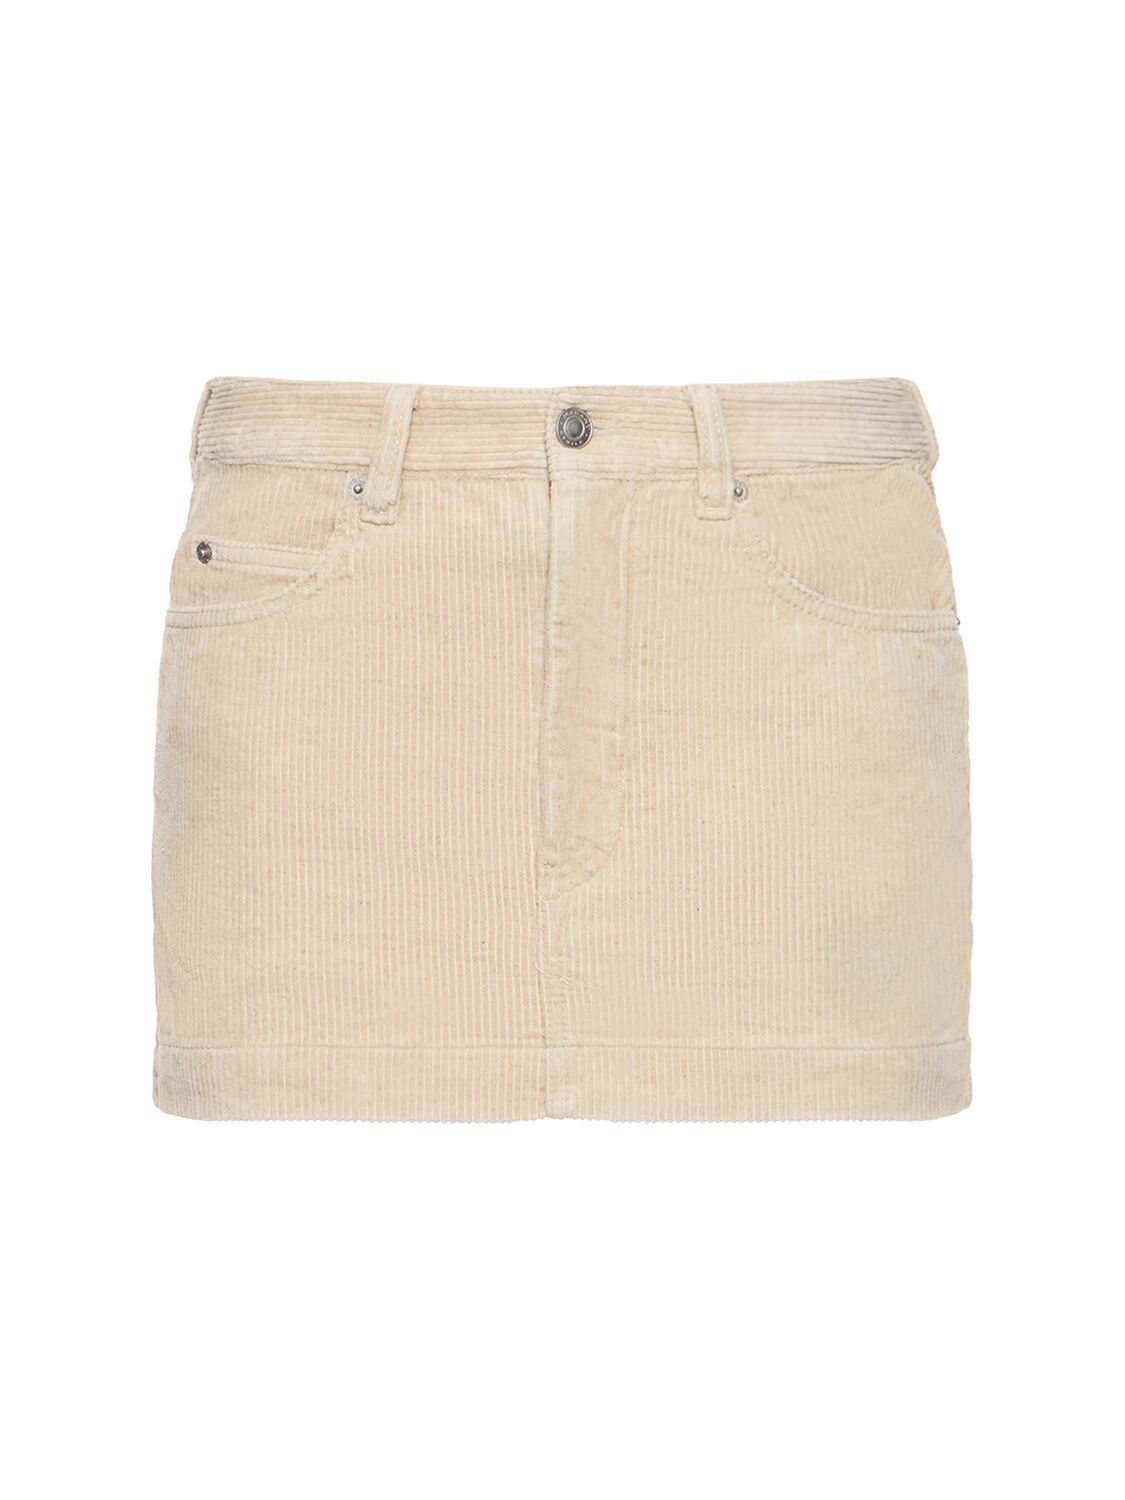 Image of Rania Corduroy Cotton Linen Mini Skirt